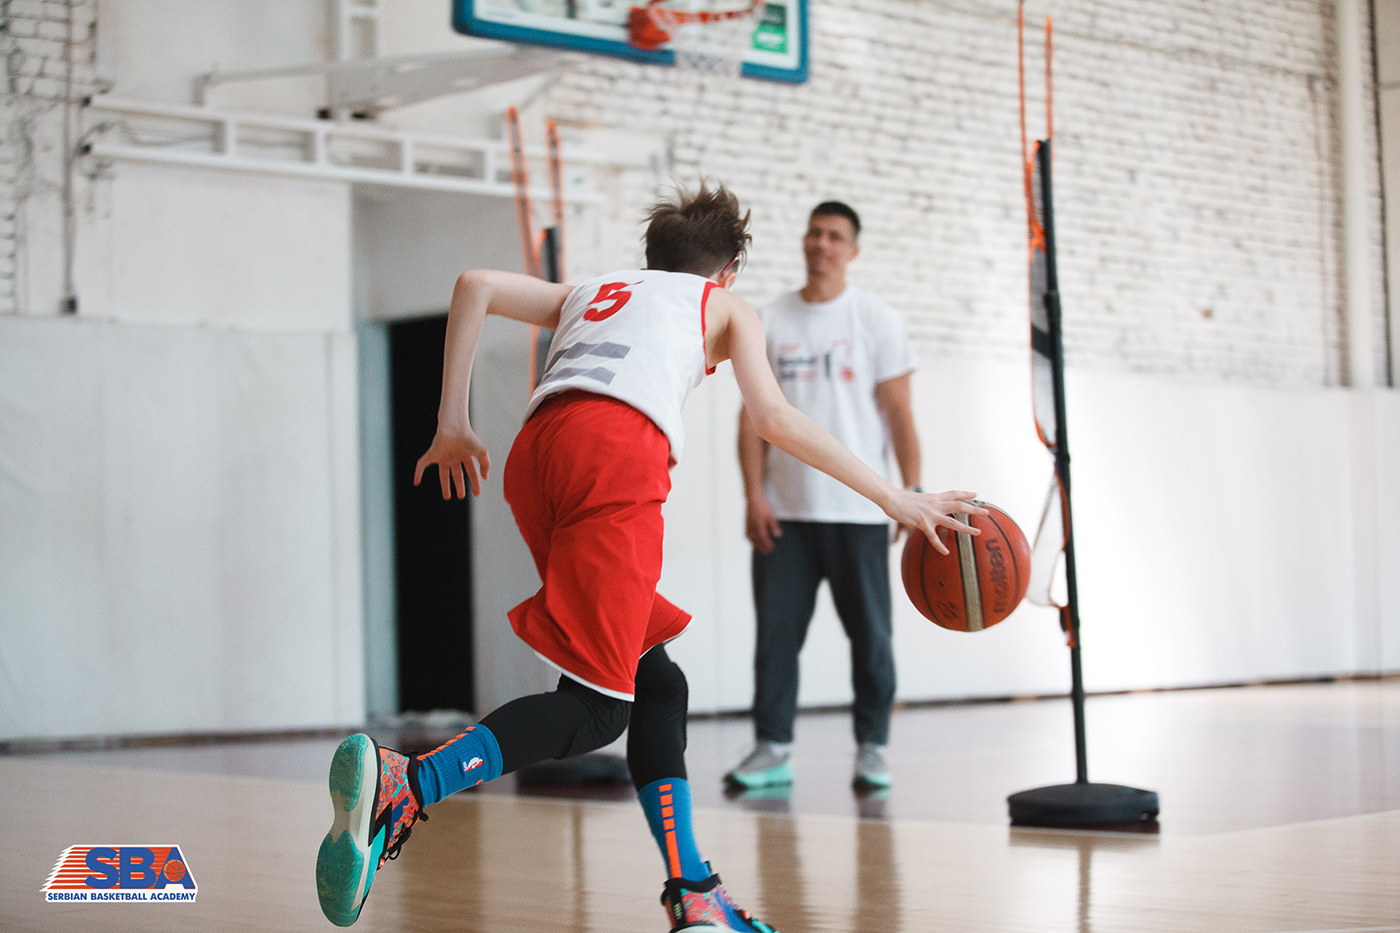 basketball jordan kids sports lifestyle report training workout coaching sport